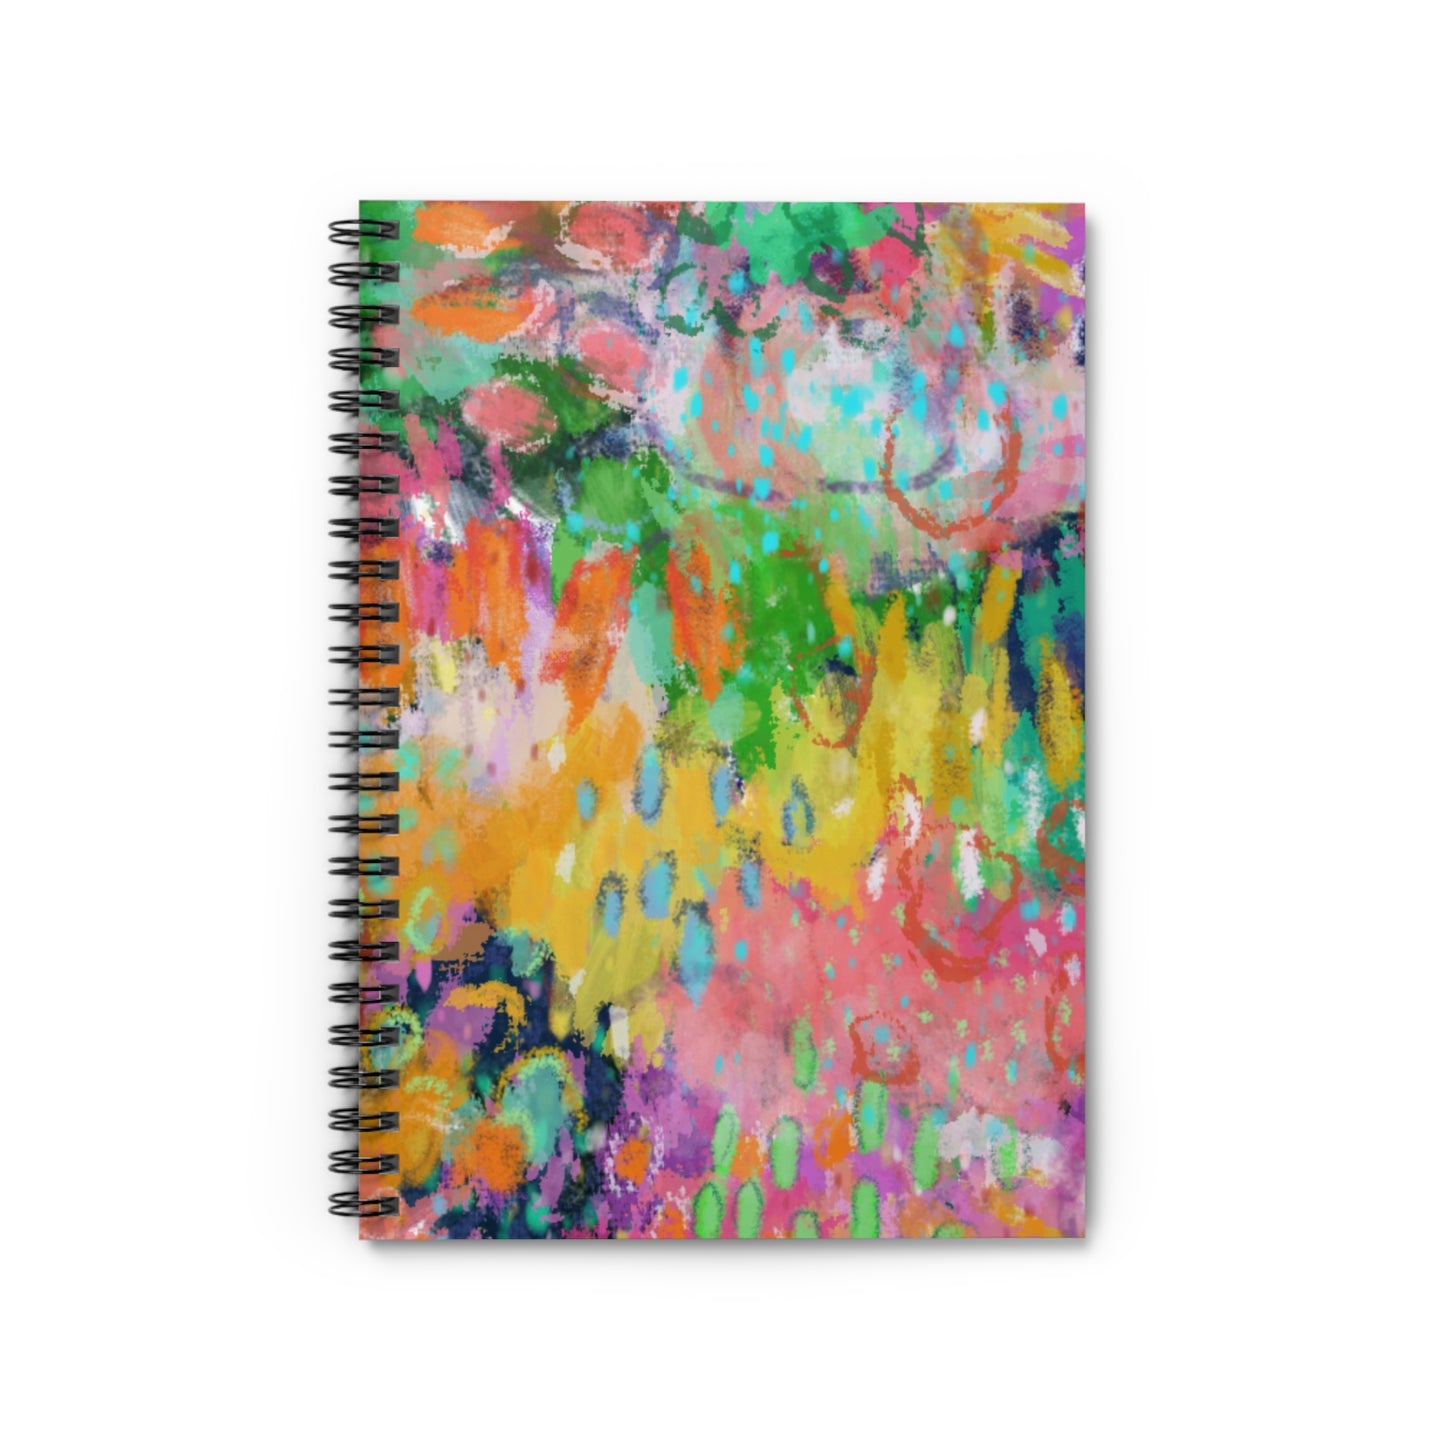 "Bloom" Spiral Notebook - Ruled Line